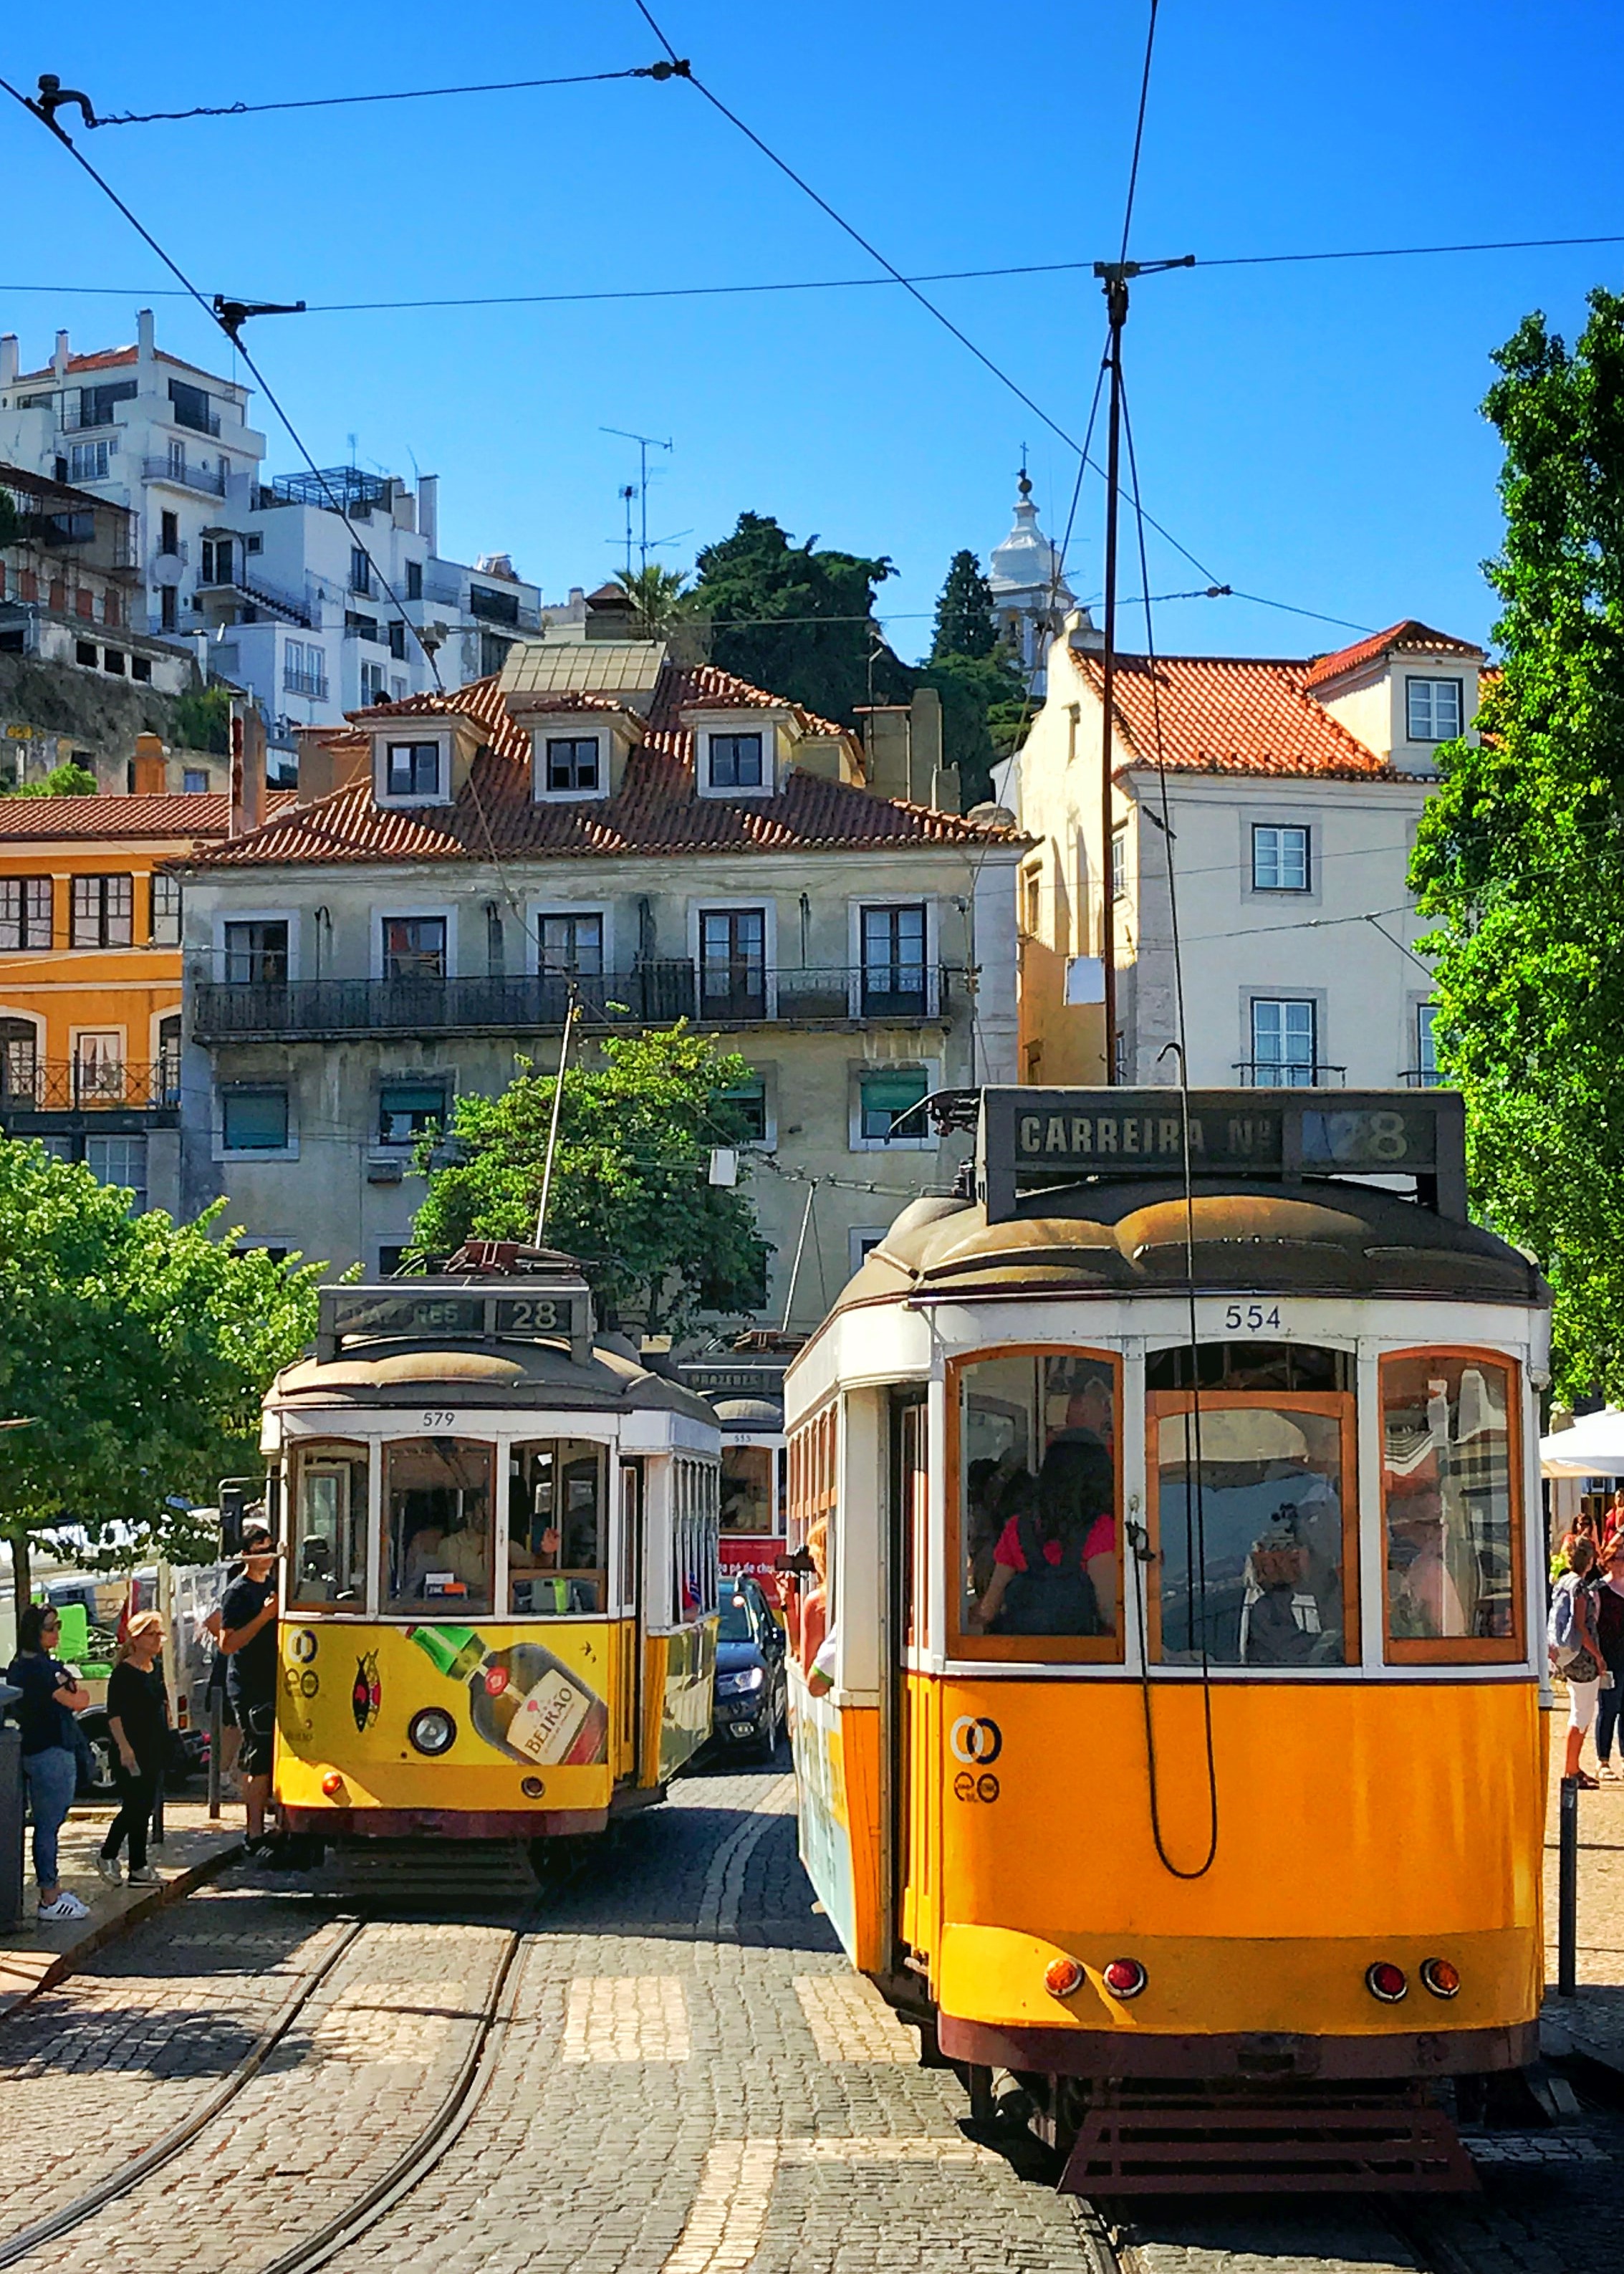  Lisbon, Portugal